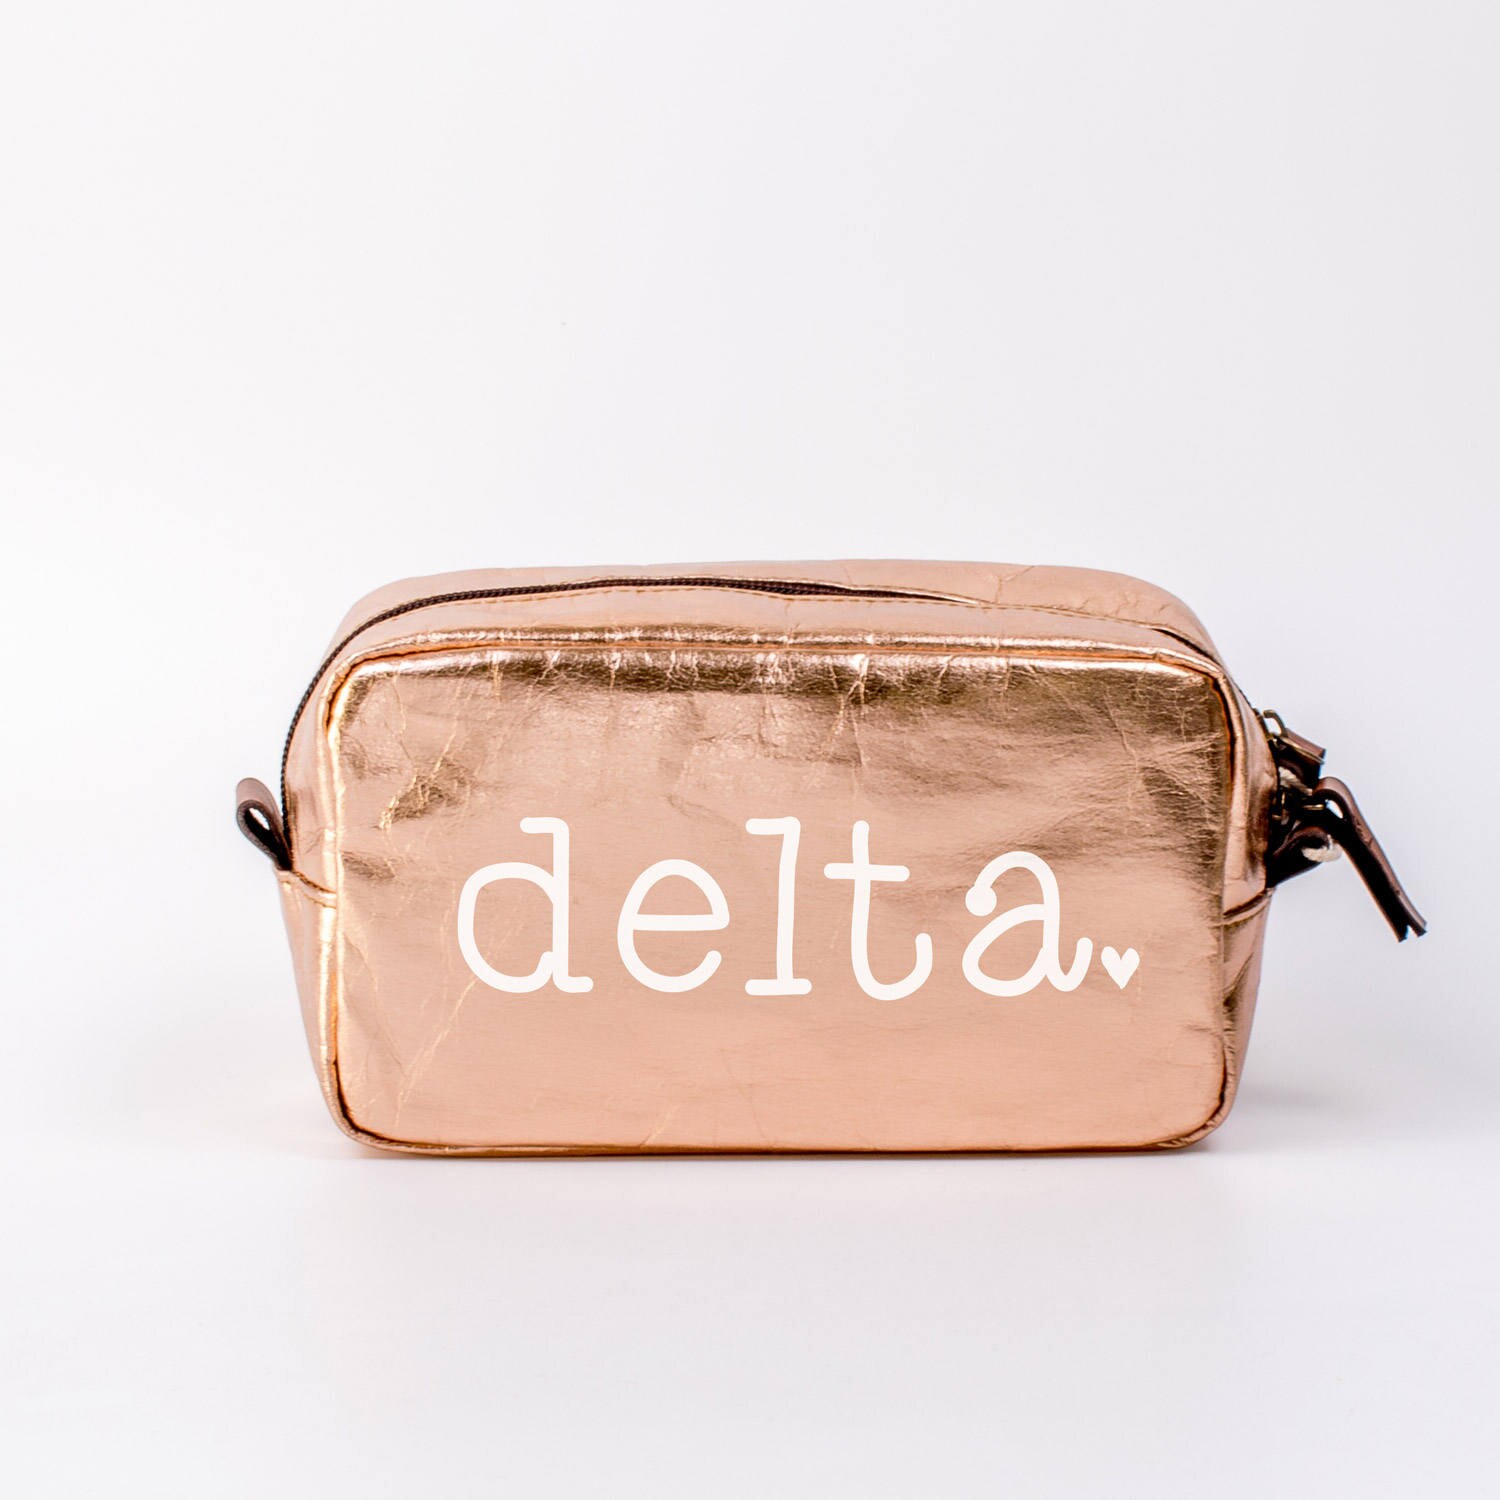 Details about   Delta Airlines In Flight Zip Zippered Makeup Toiletry Travel Bag Case Socks Pen 